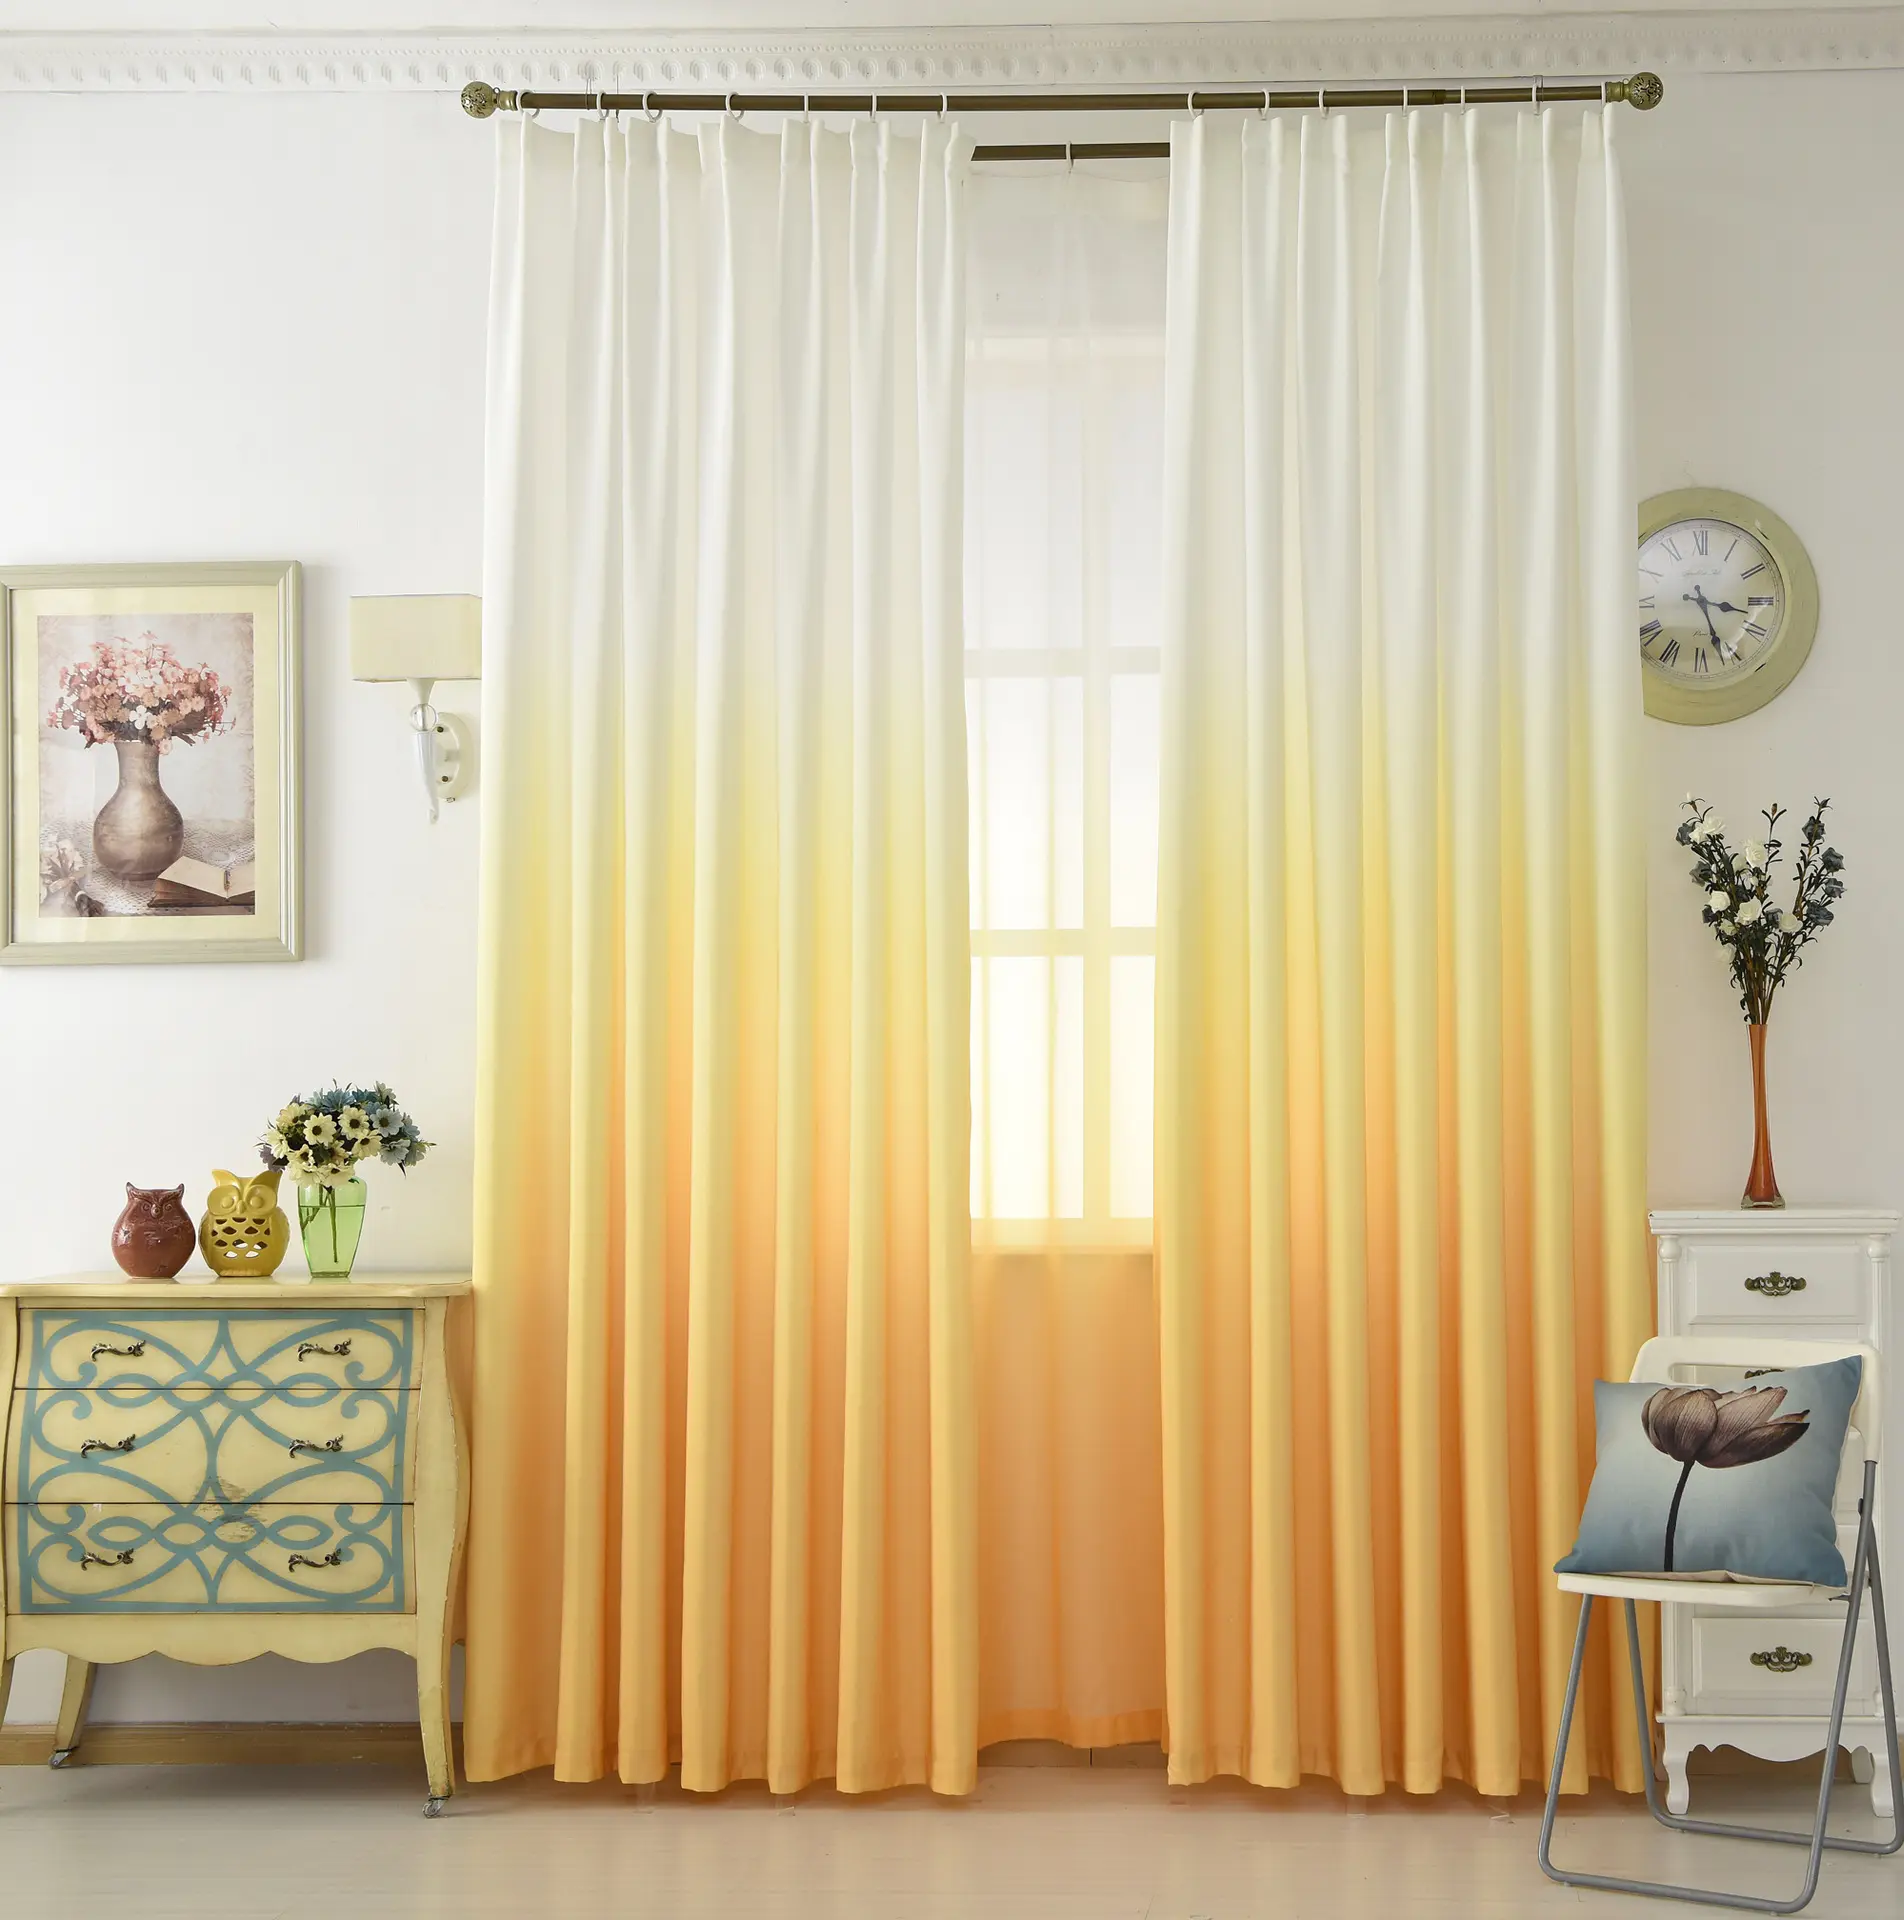 Gancho superior de ojal para cortina, Color puro gradiente, listo para fabricar cortinas, transparente